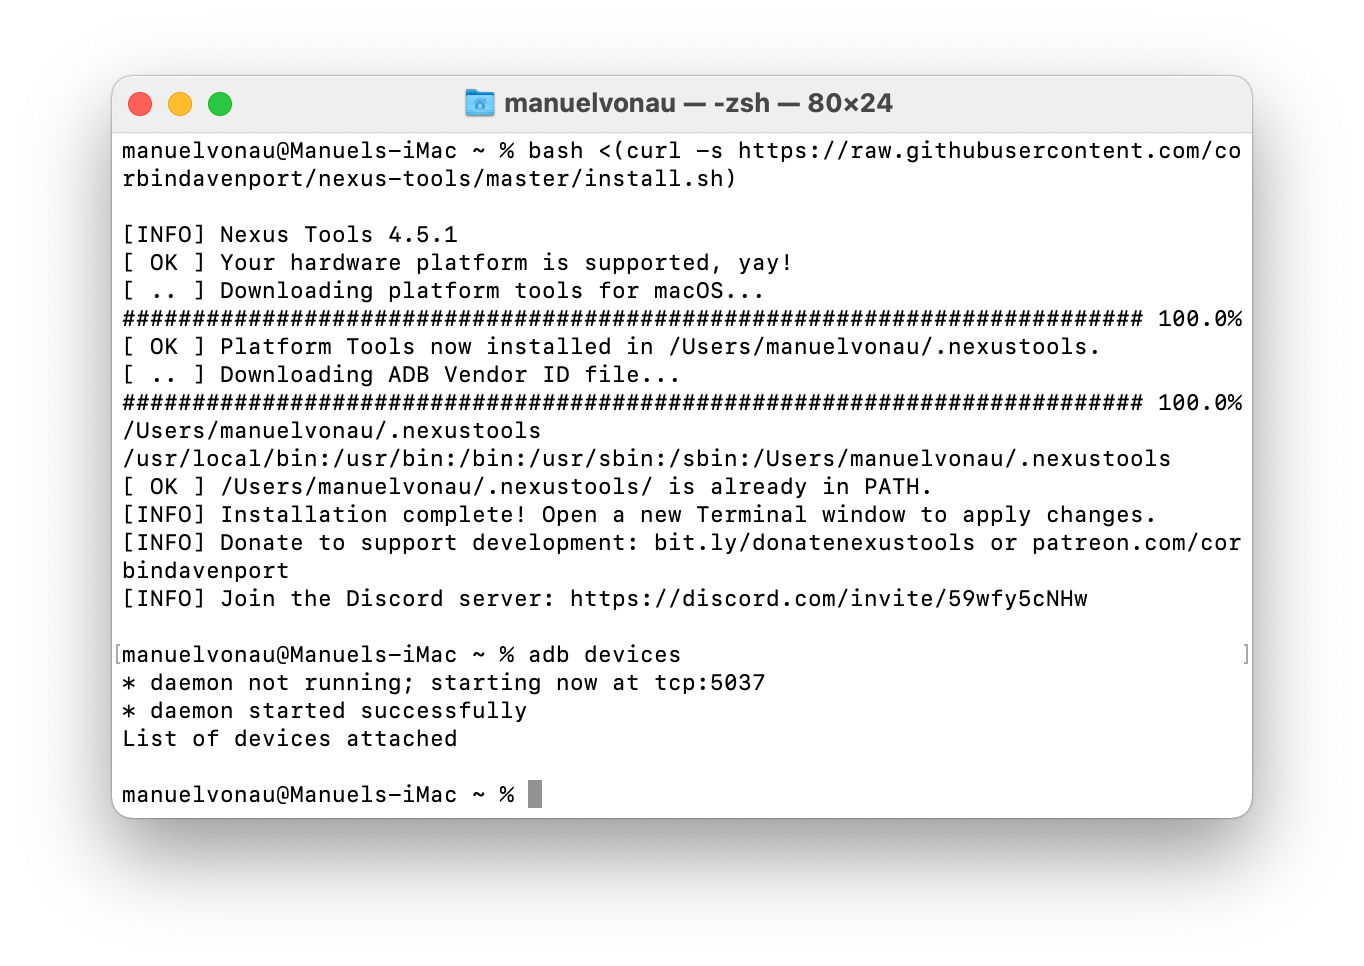 Screenshot of the Nexus Tools installation progress in a macOS terminal